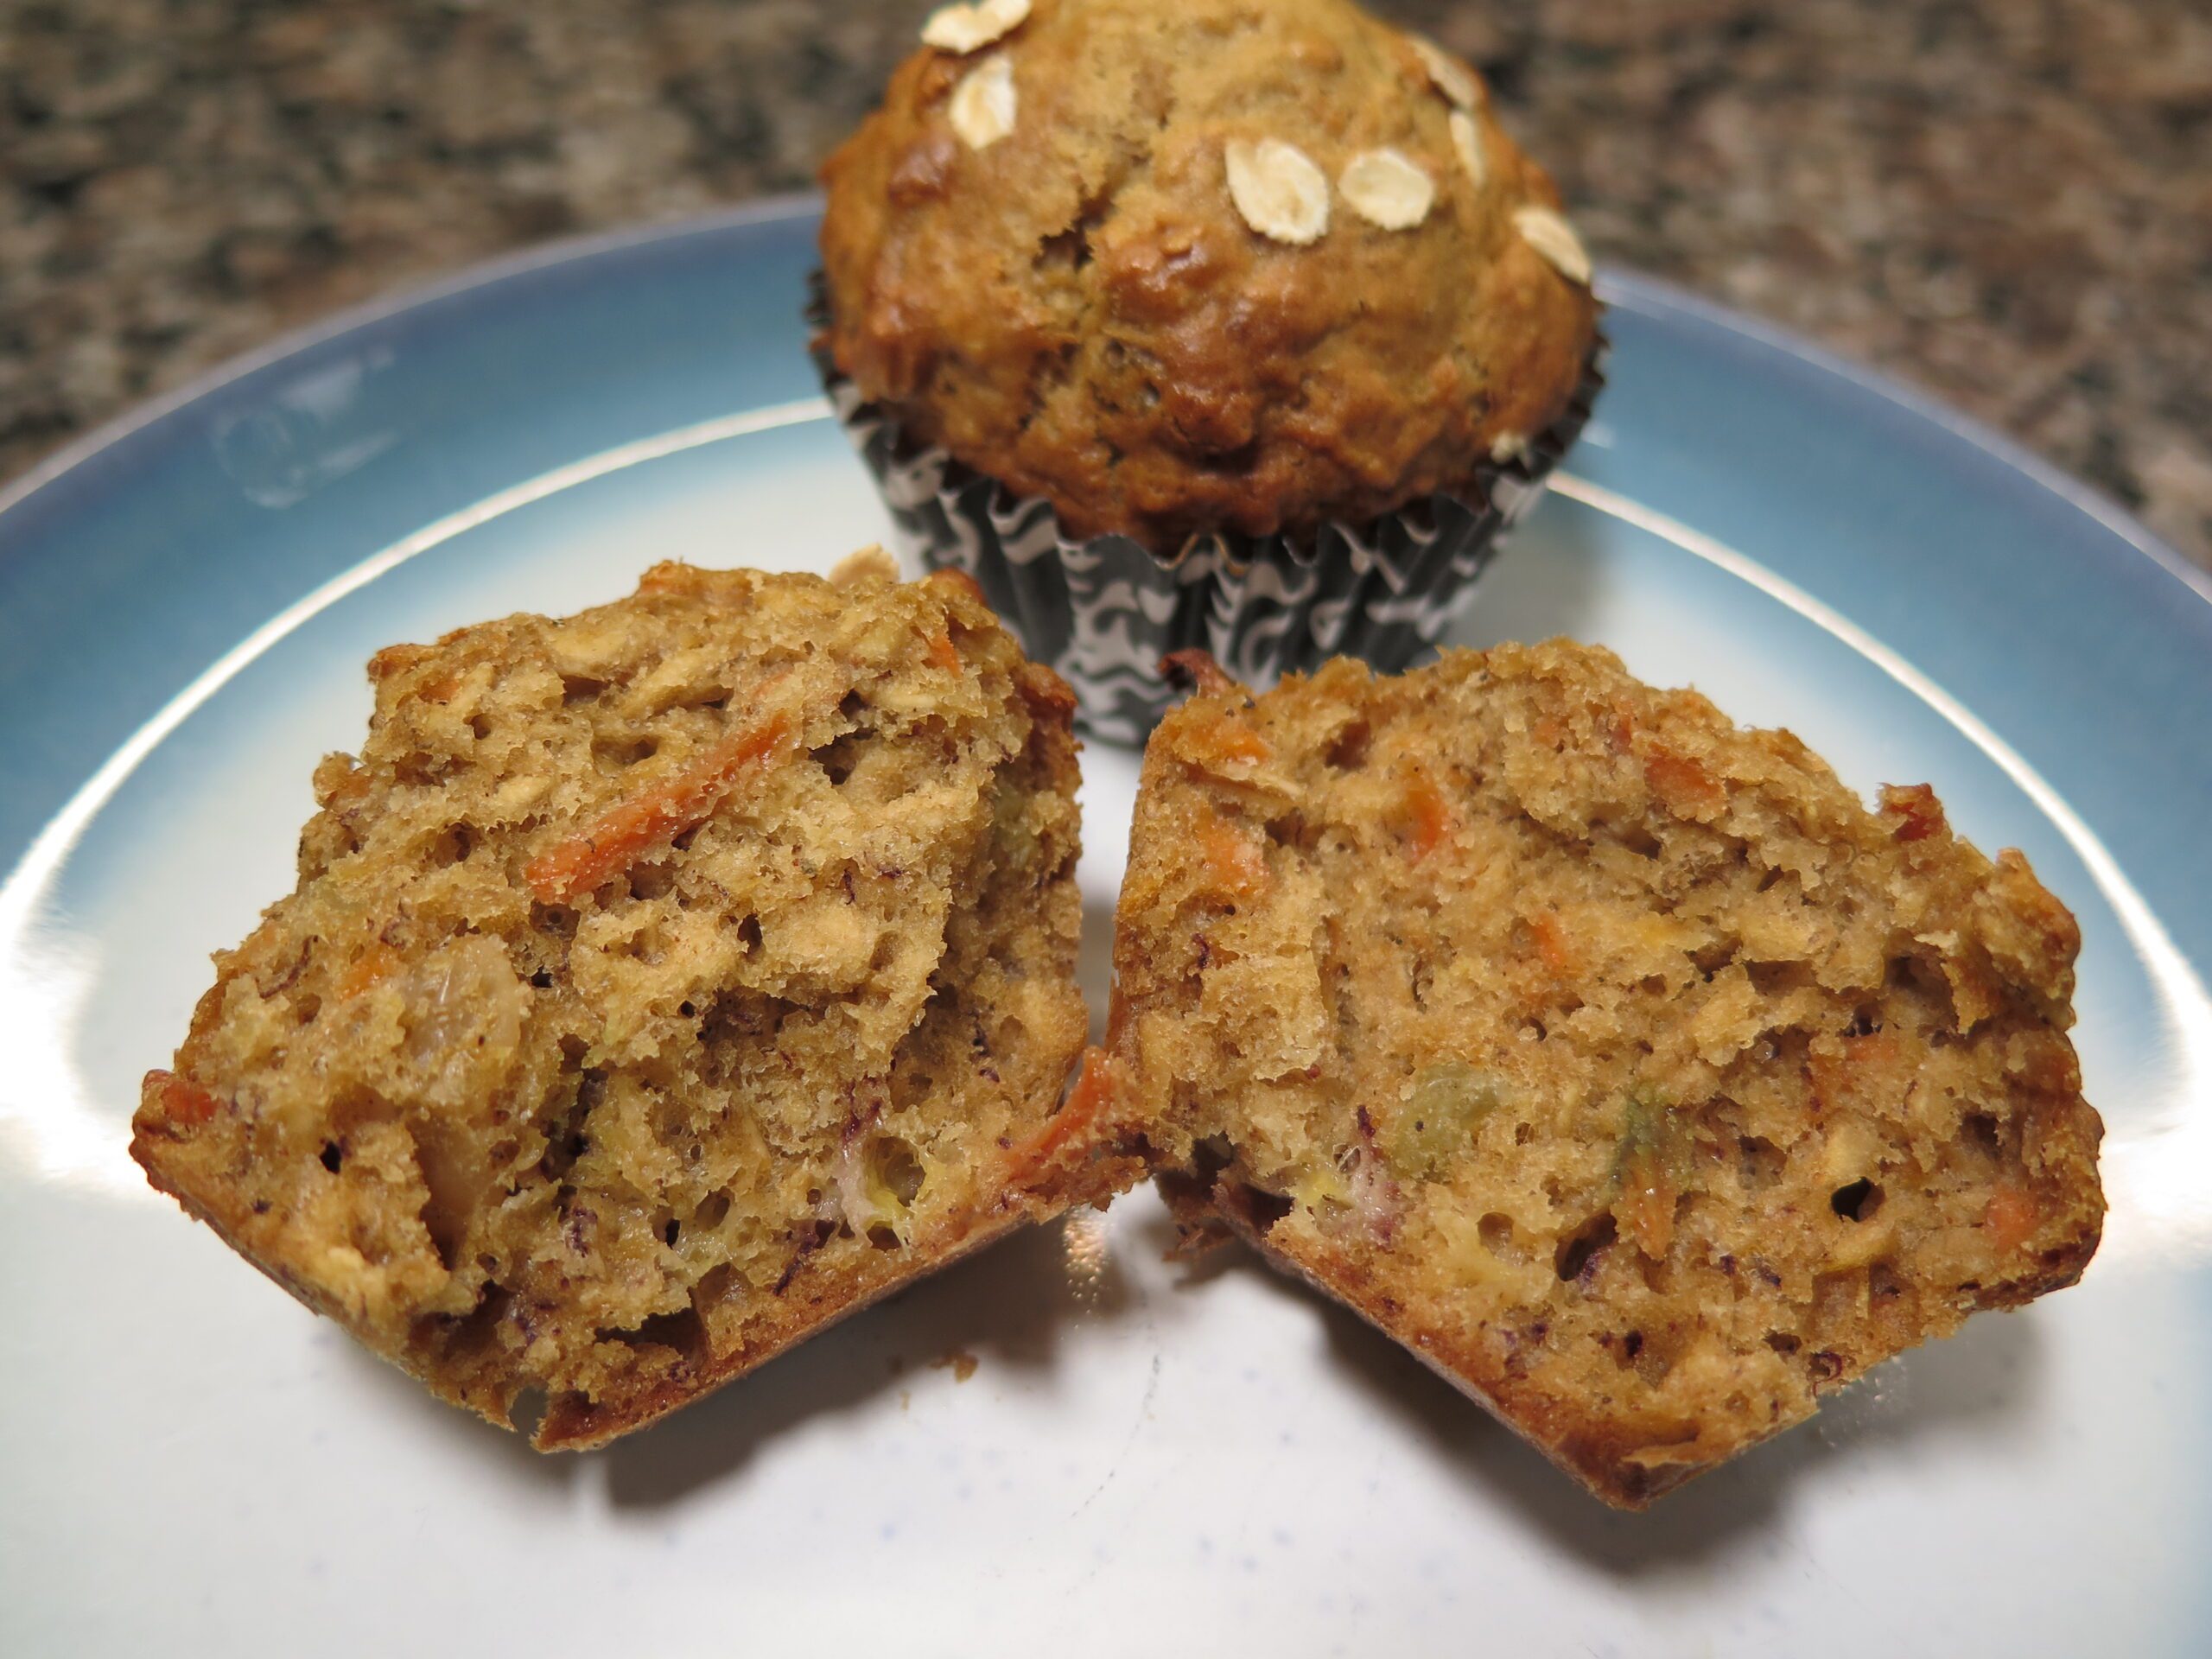 Healthy morning muffins - split open